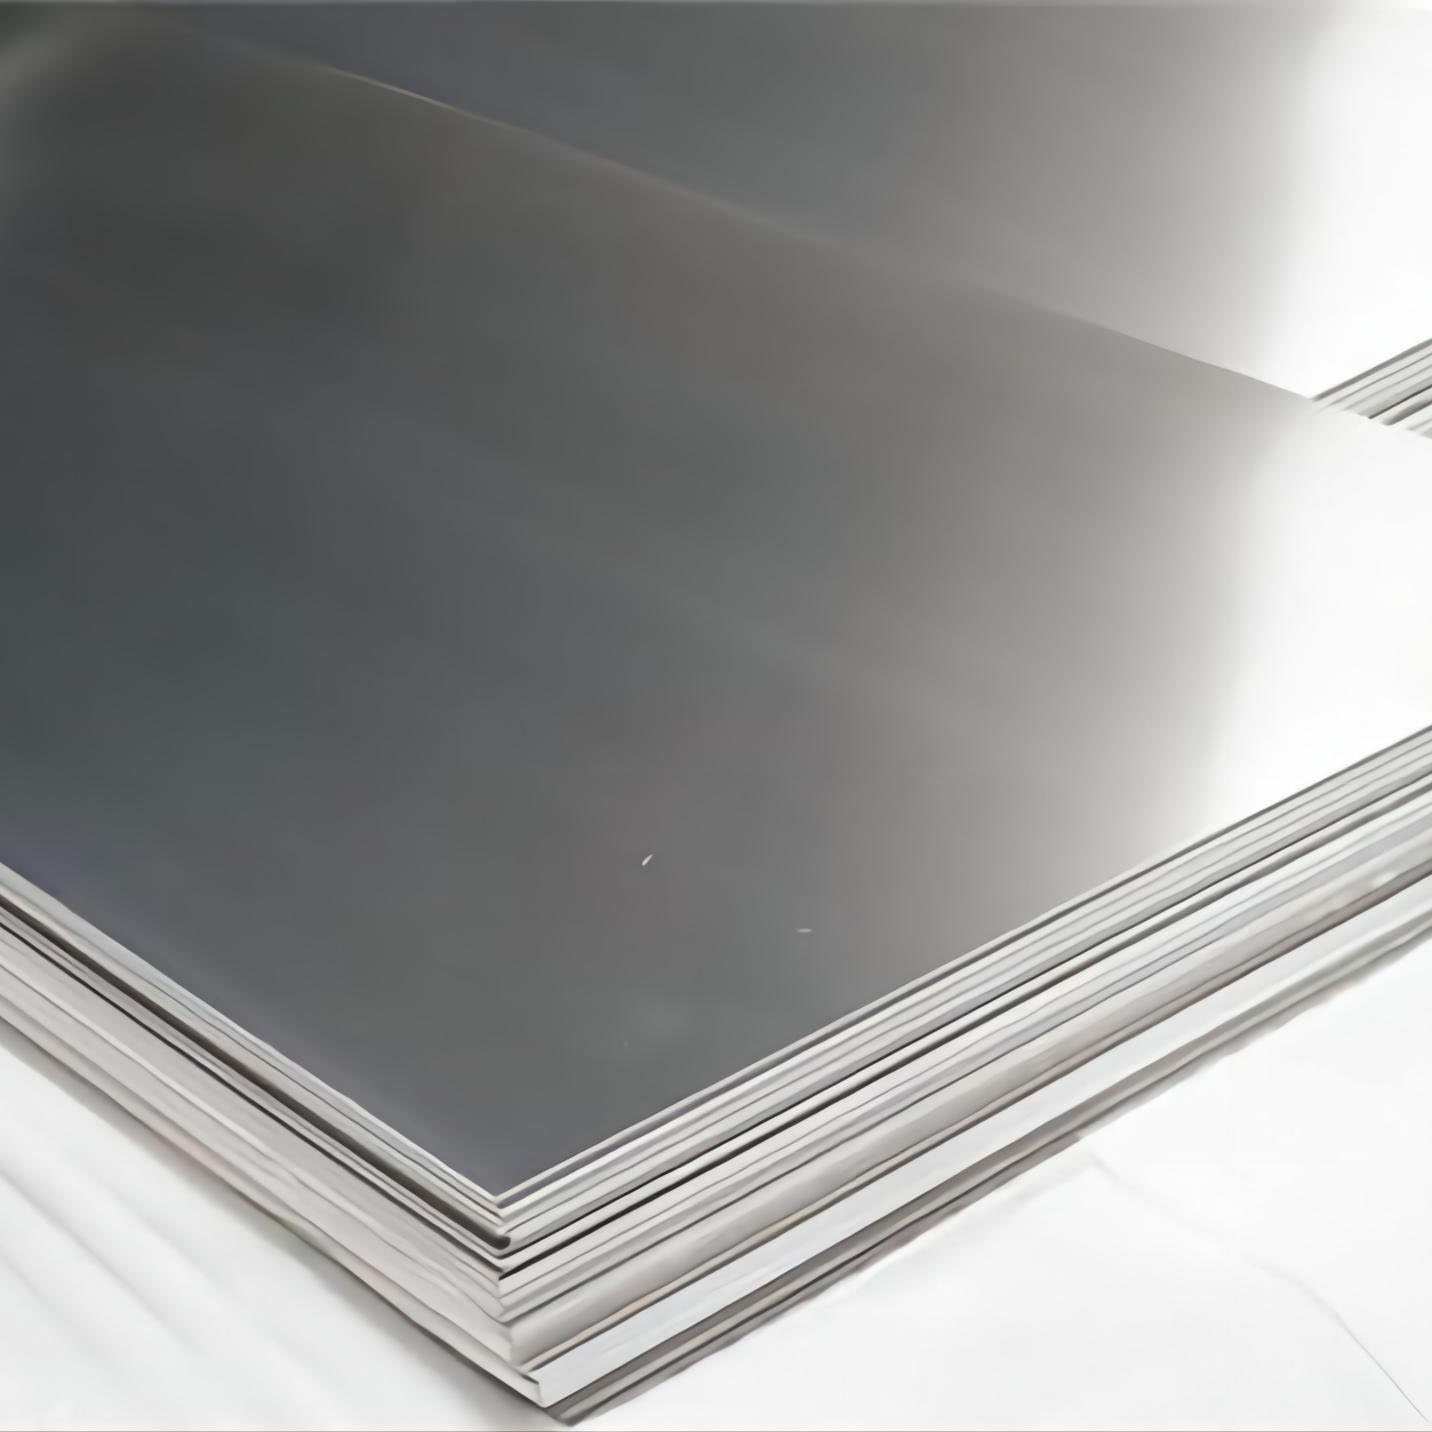 China Manufacture Supplier 1100 Aluminum Plate nasongadina sary